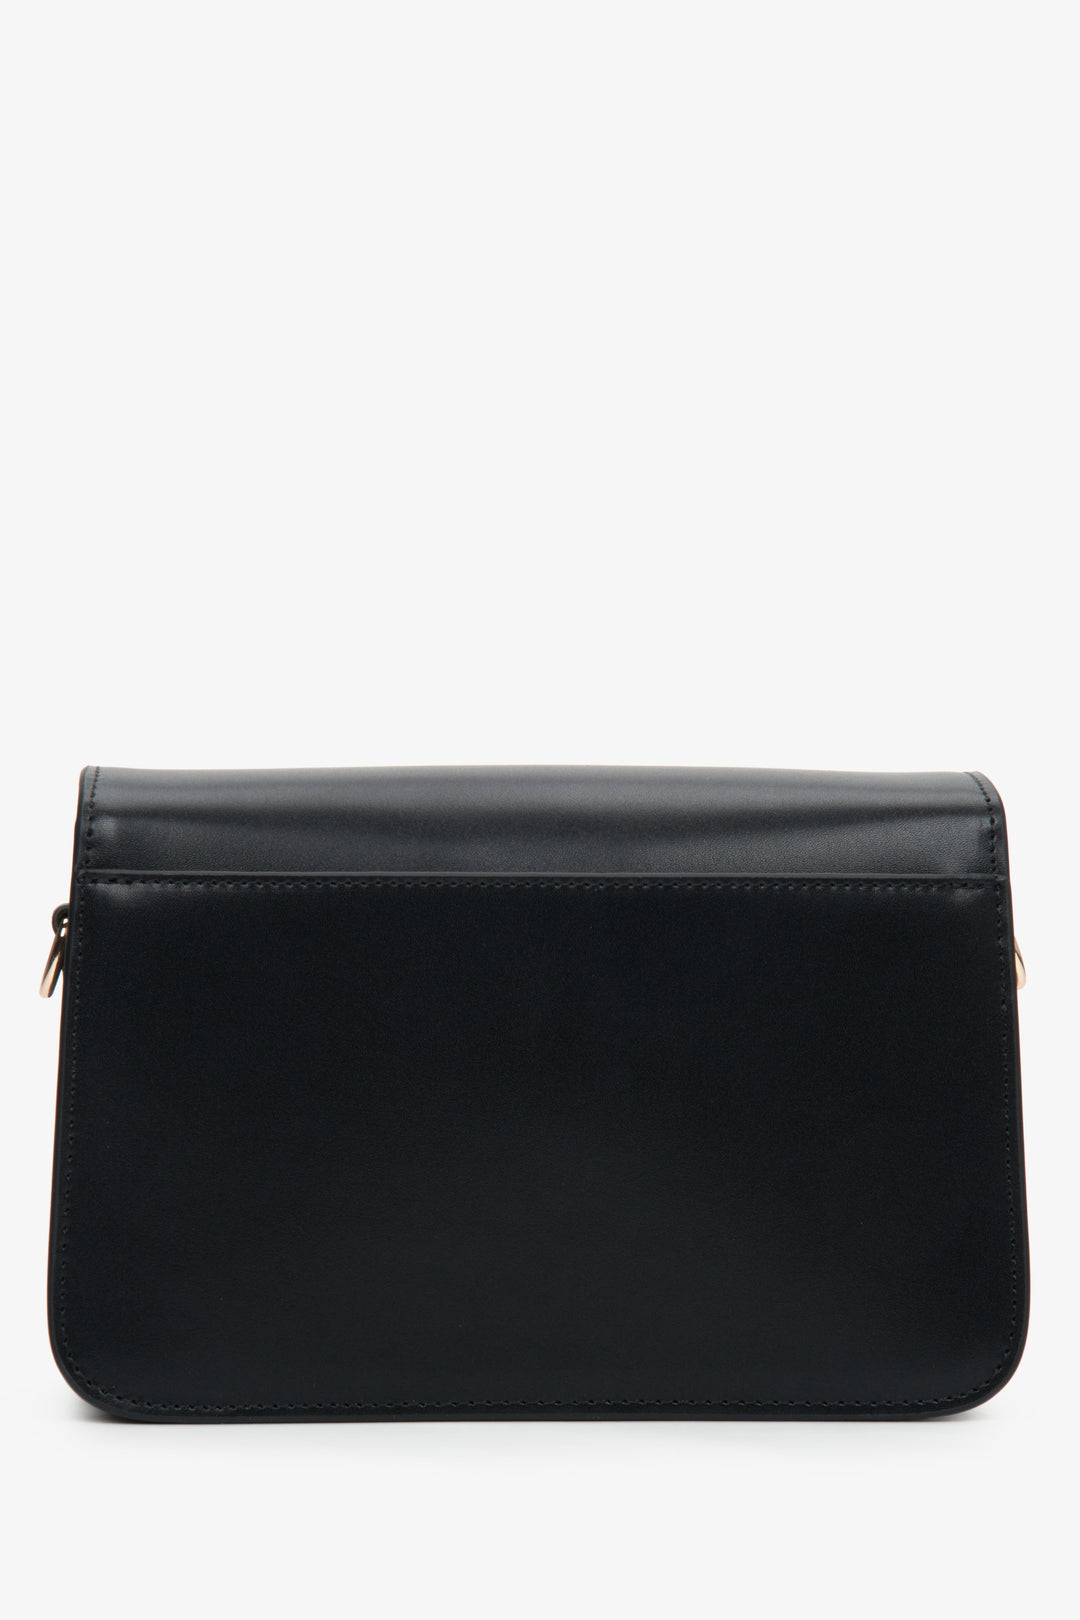 Women's black handbag with a golden chain Estro - back view.